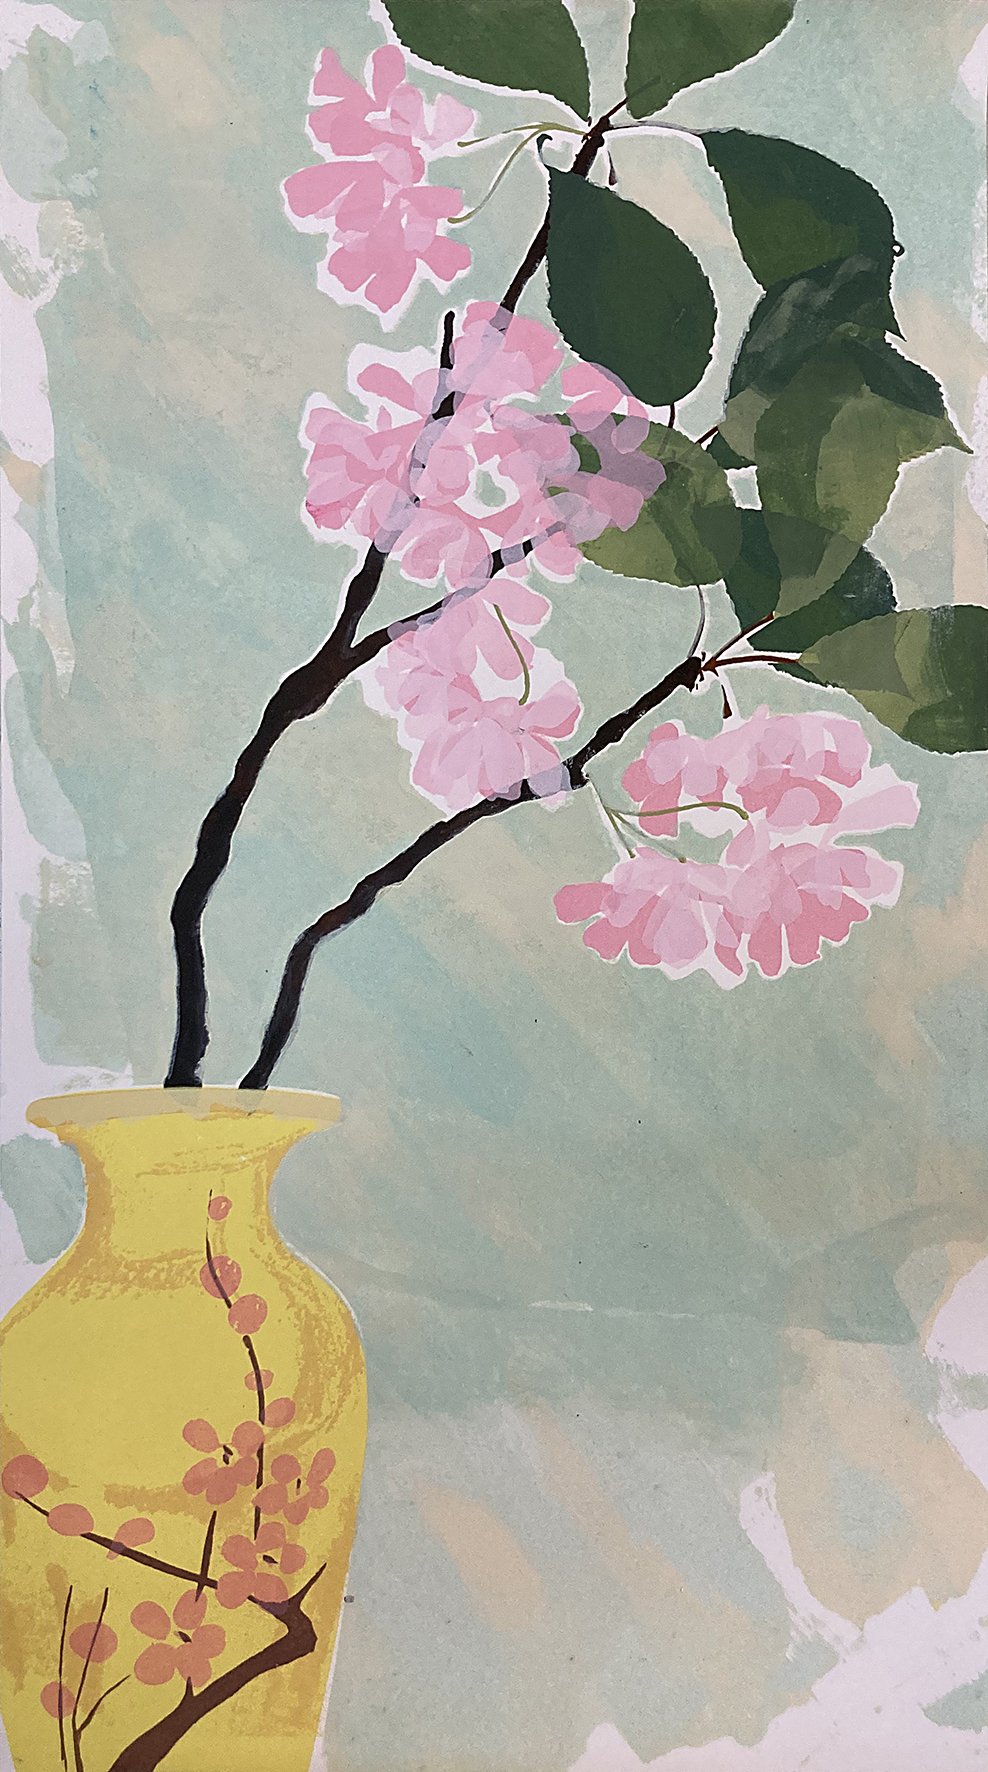   Cherry Blossom Vase  Variable mono screenprint on paper 340 x 600mm 